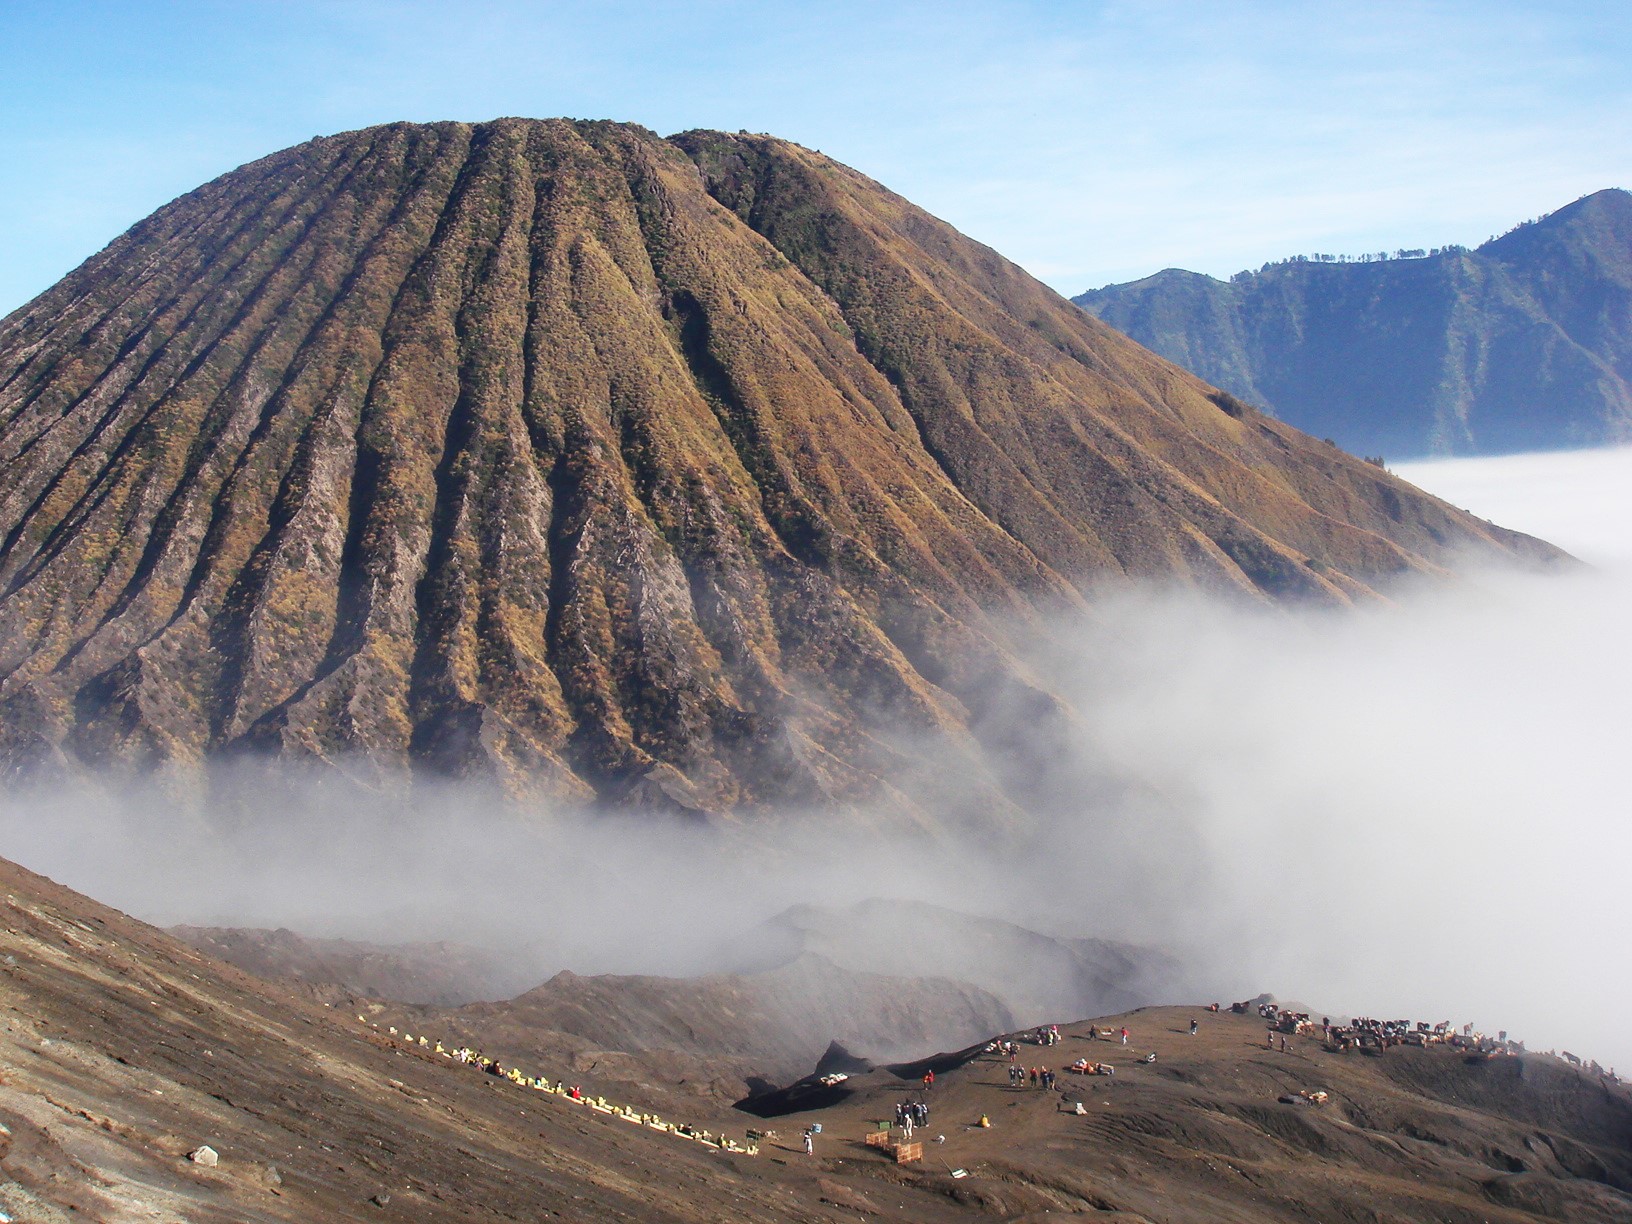 Hiking Mount Bromo in Indonesia